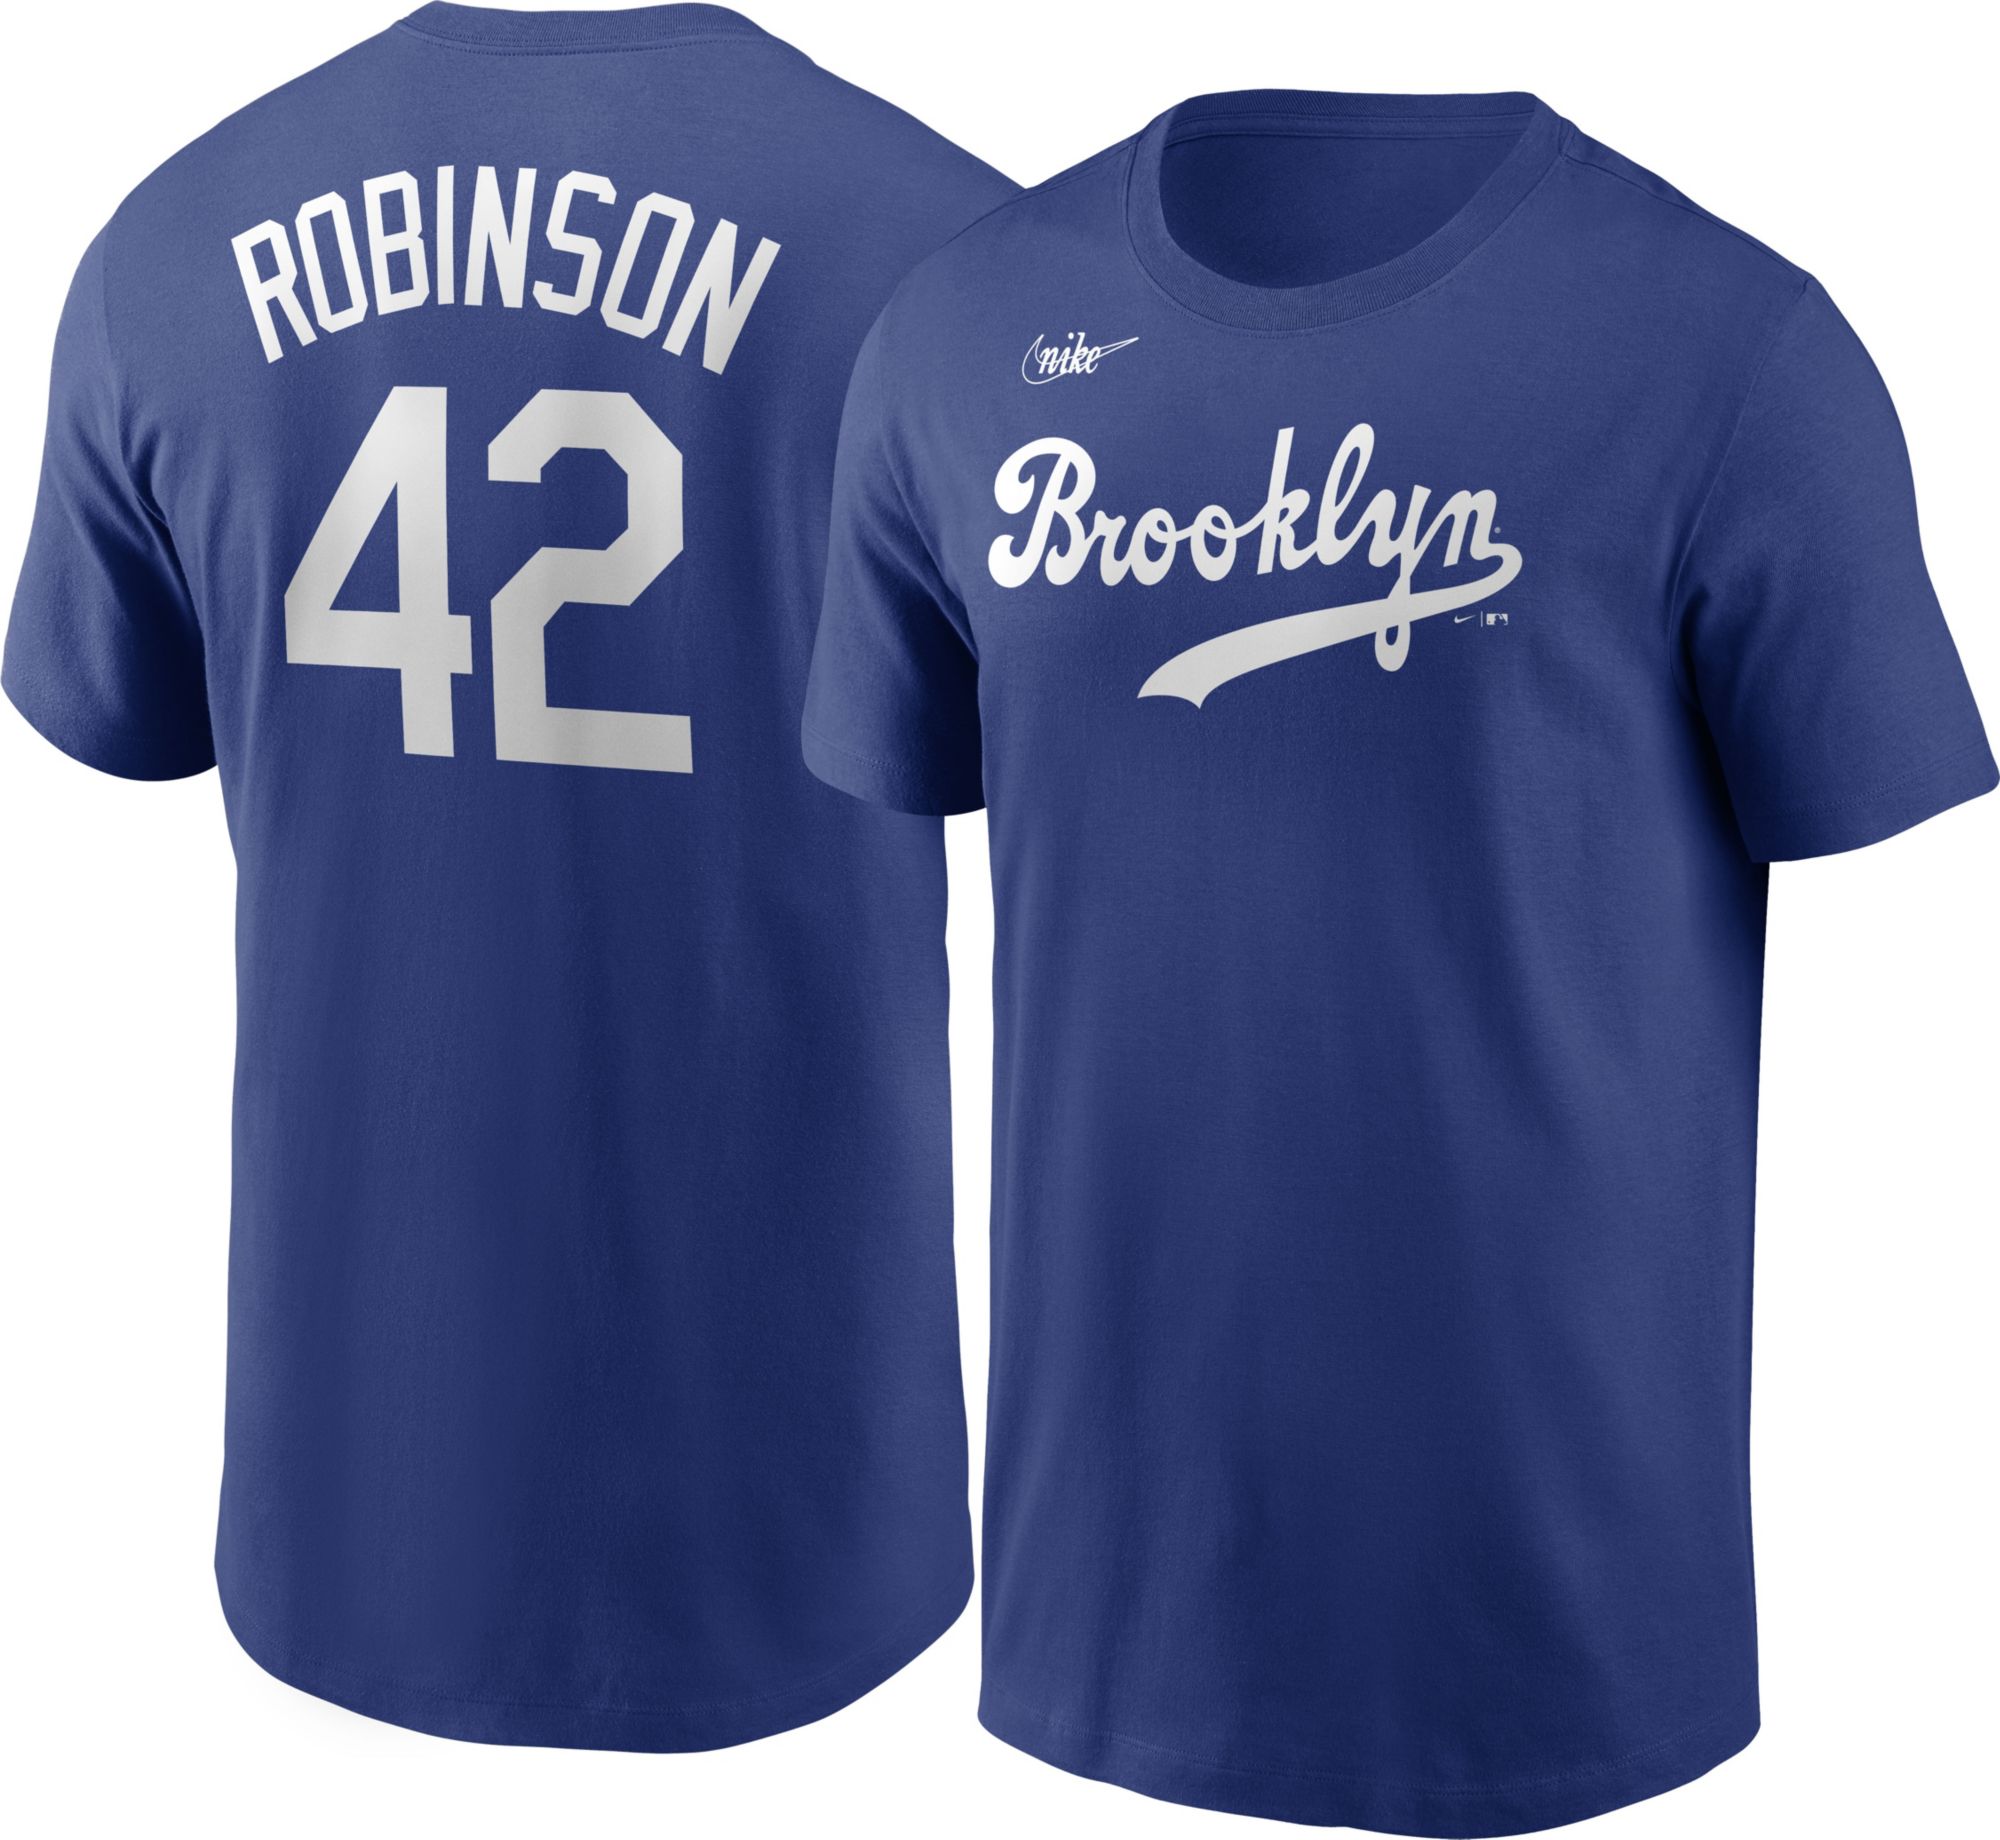 Nike Men's Los Angeles Dodgers Jackie Robinson #42 Grey Cool Base